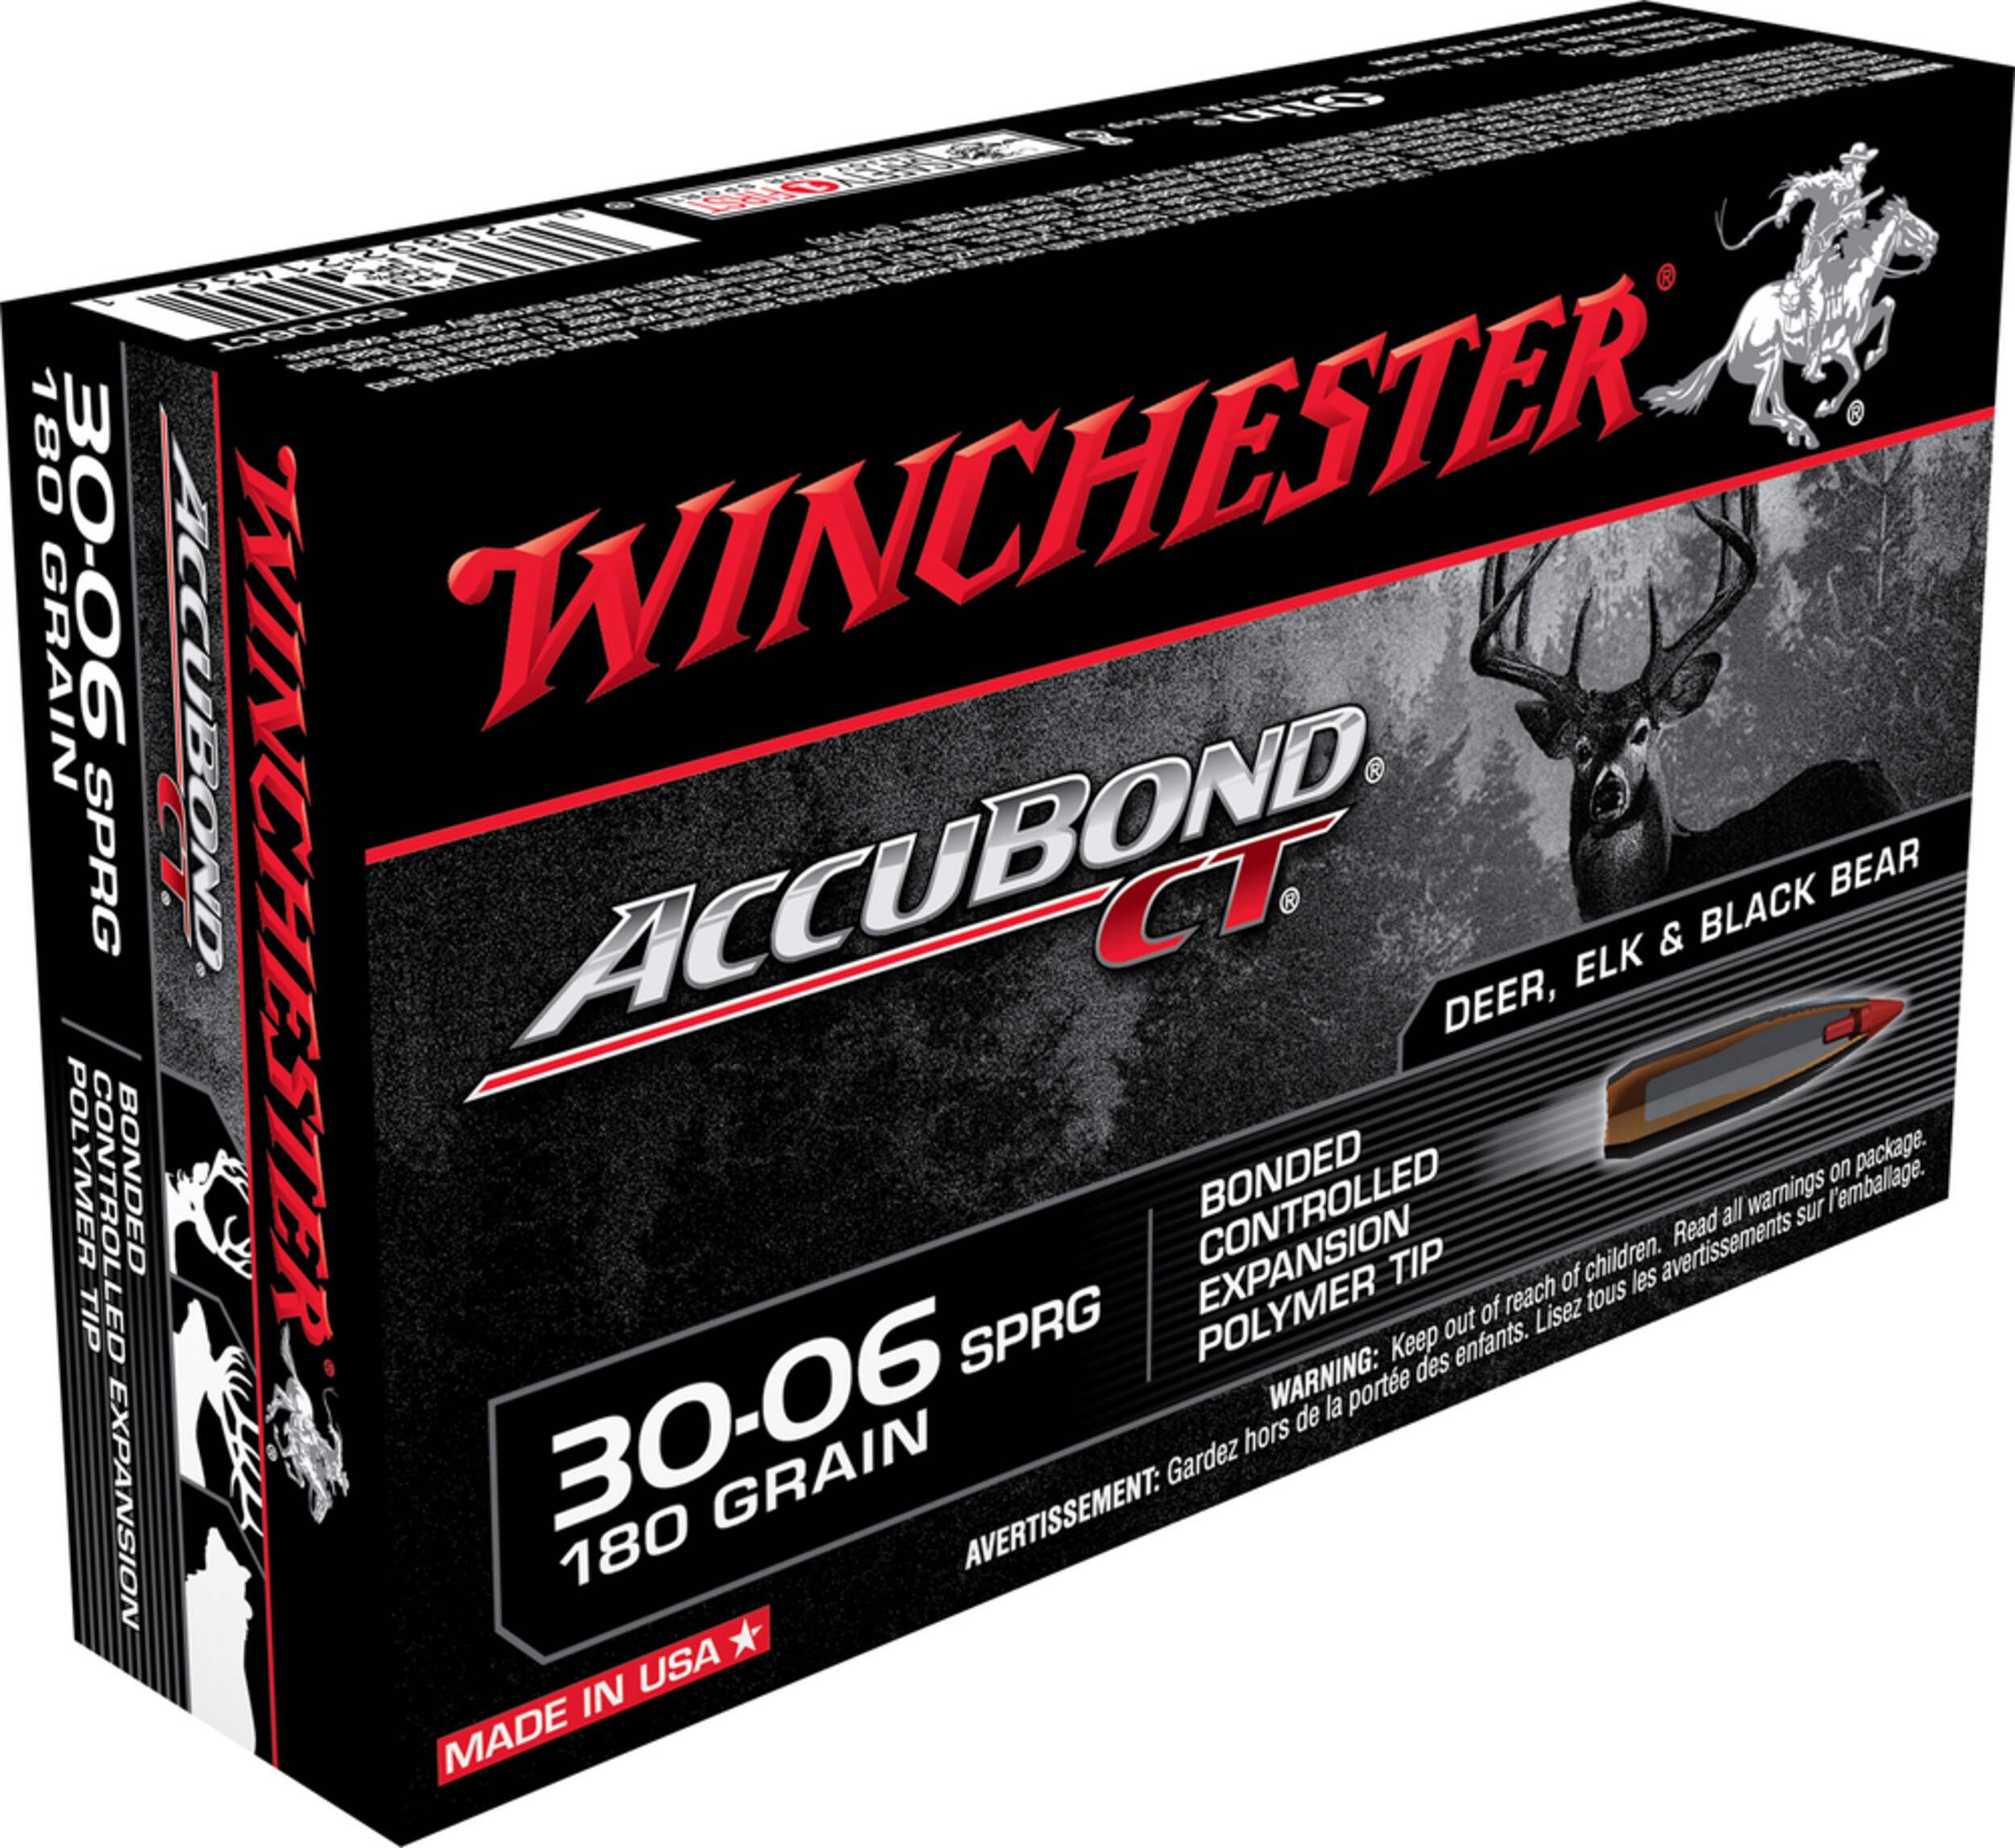 Winchester Accubond 30-06 SPRG180-Grain Ammunition